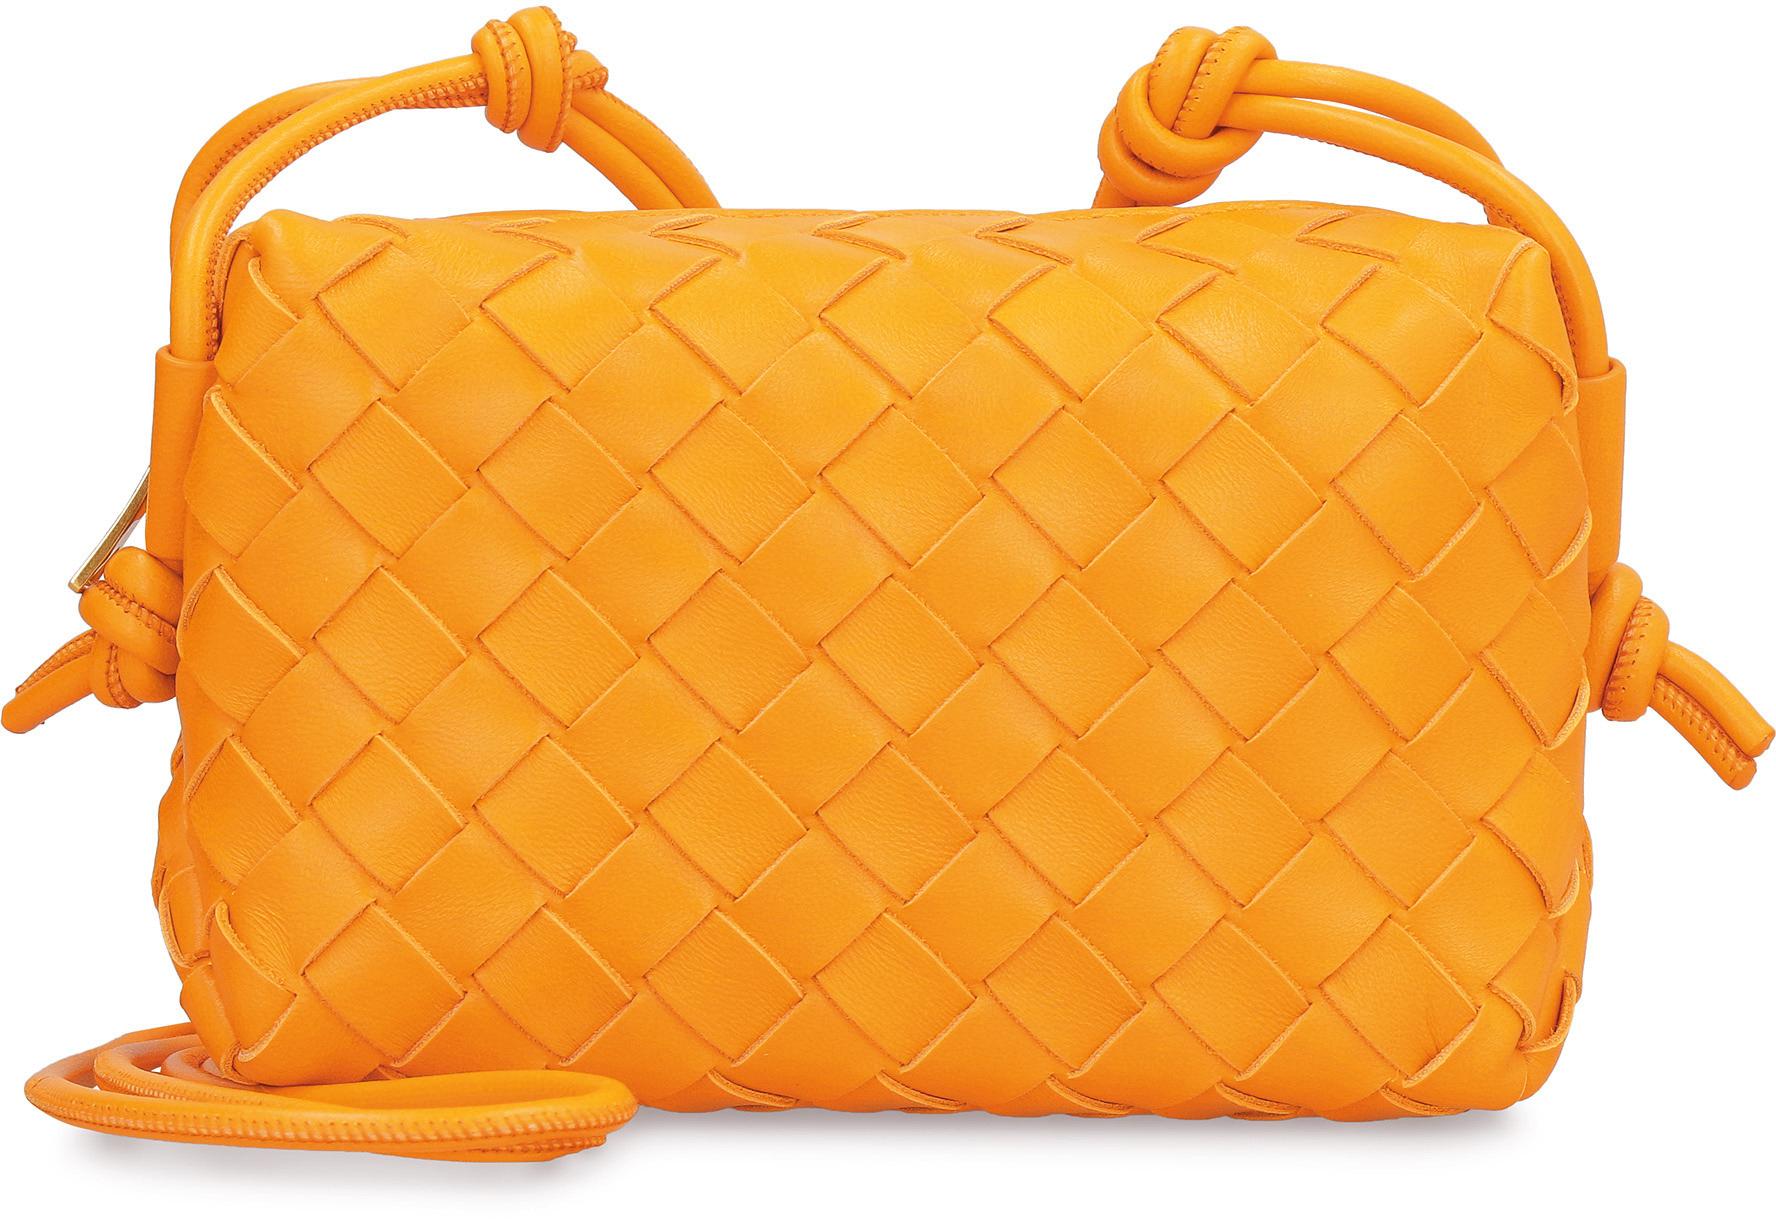 Bottega Veneta Loop Leather Crossbody Bag in Orange